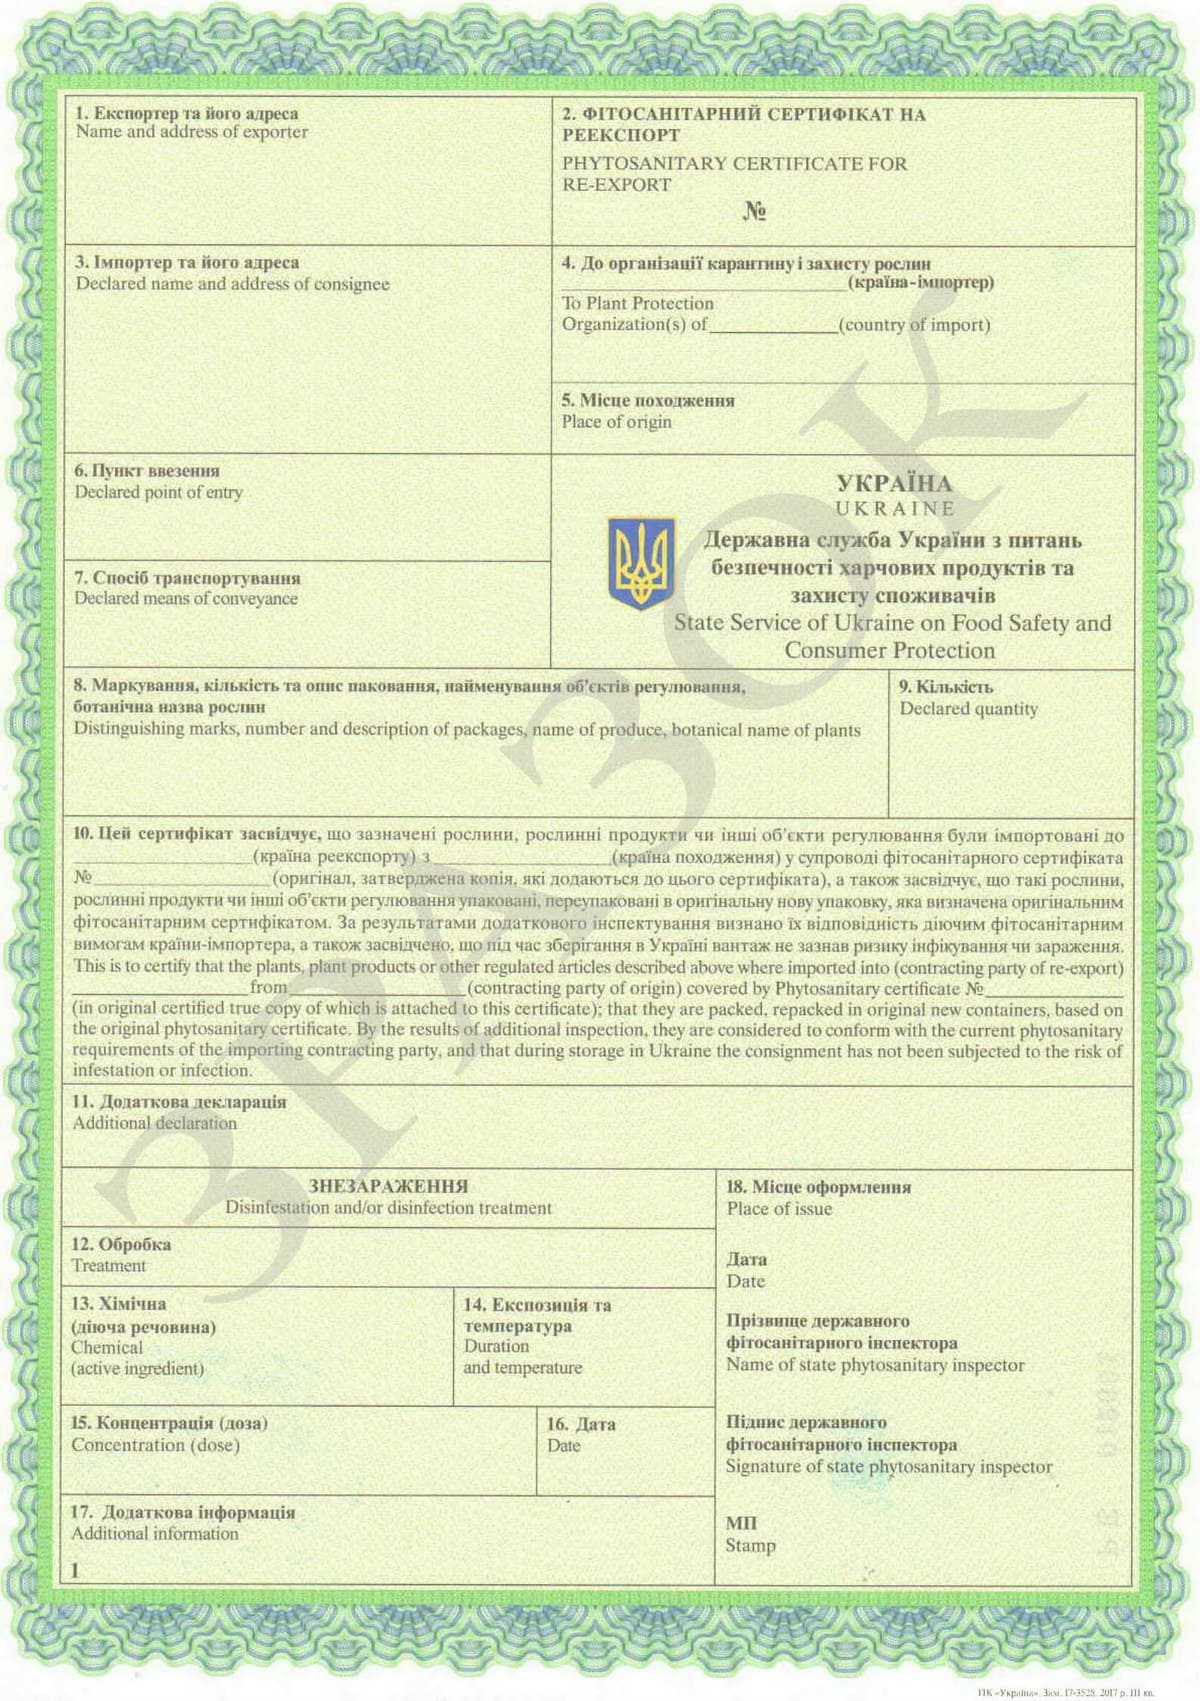 Sample phytosanitary certificate